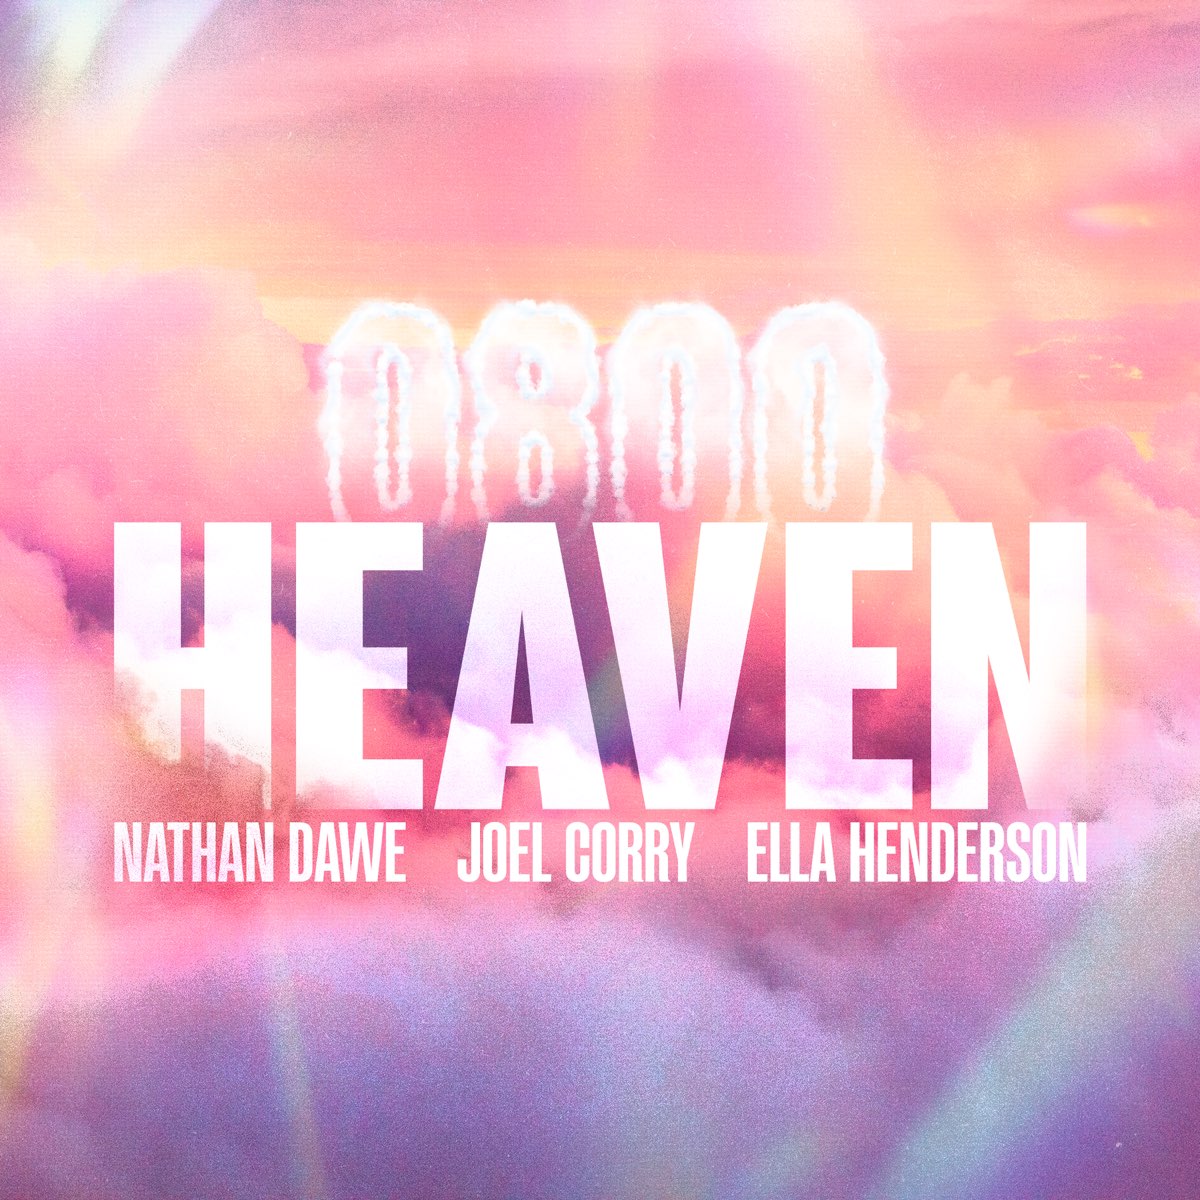 Nathan Dawe, Joel Corry, & Ella Henderson 0800 HEAVEN cover artwork